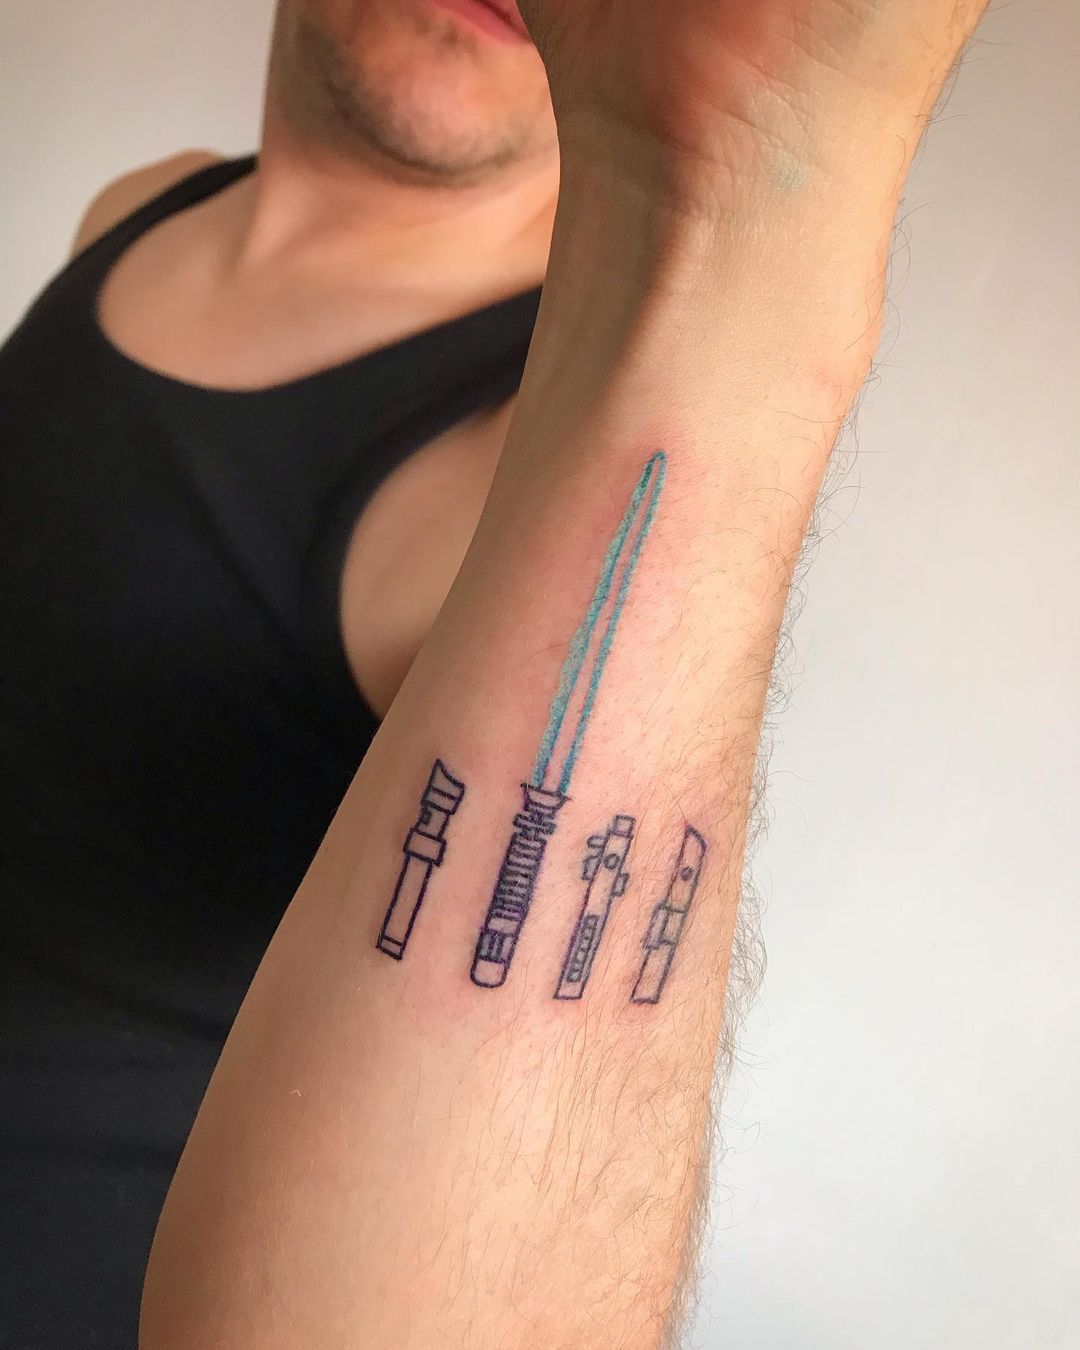 Lightsaber arm tattoo